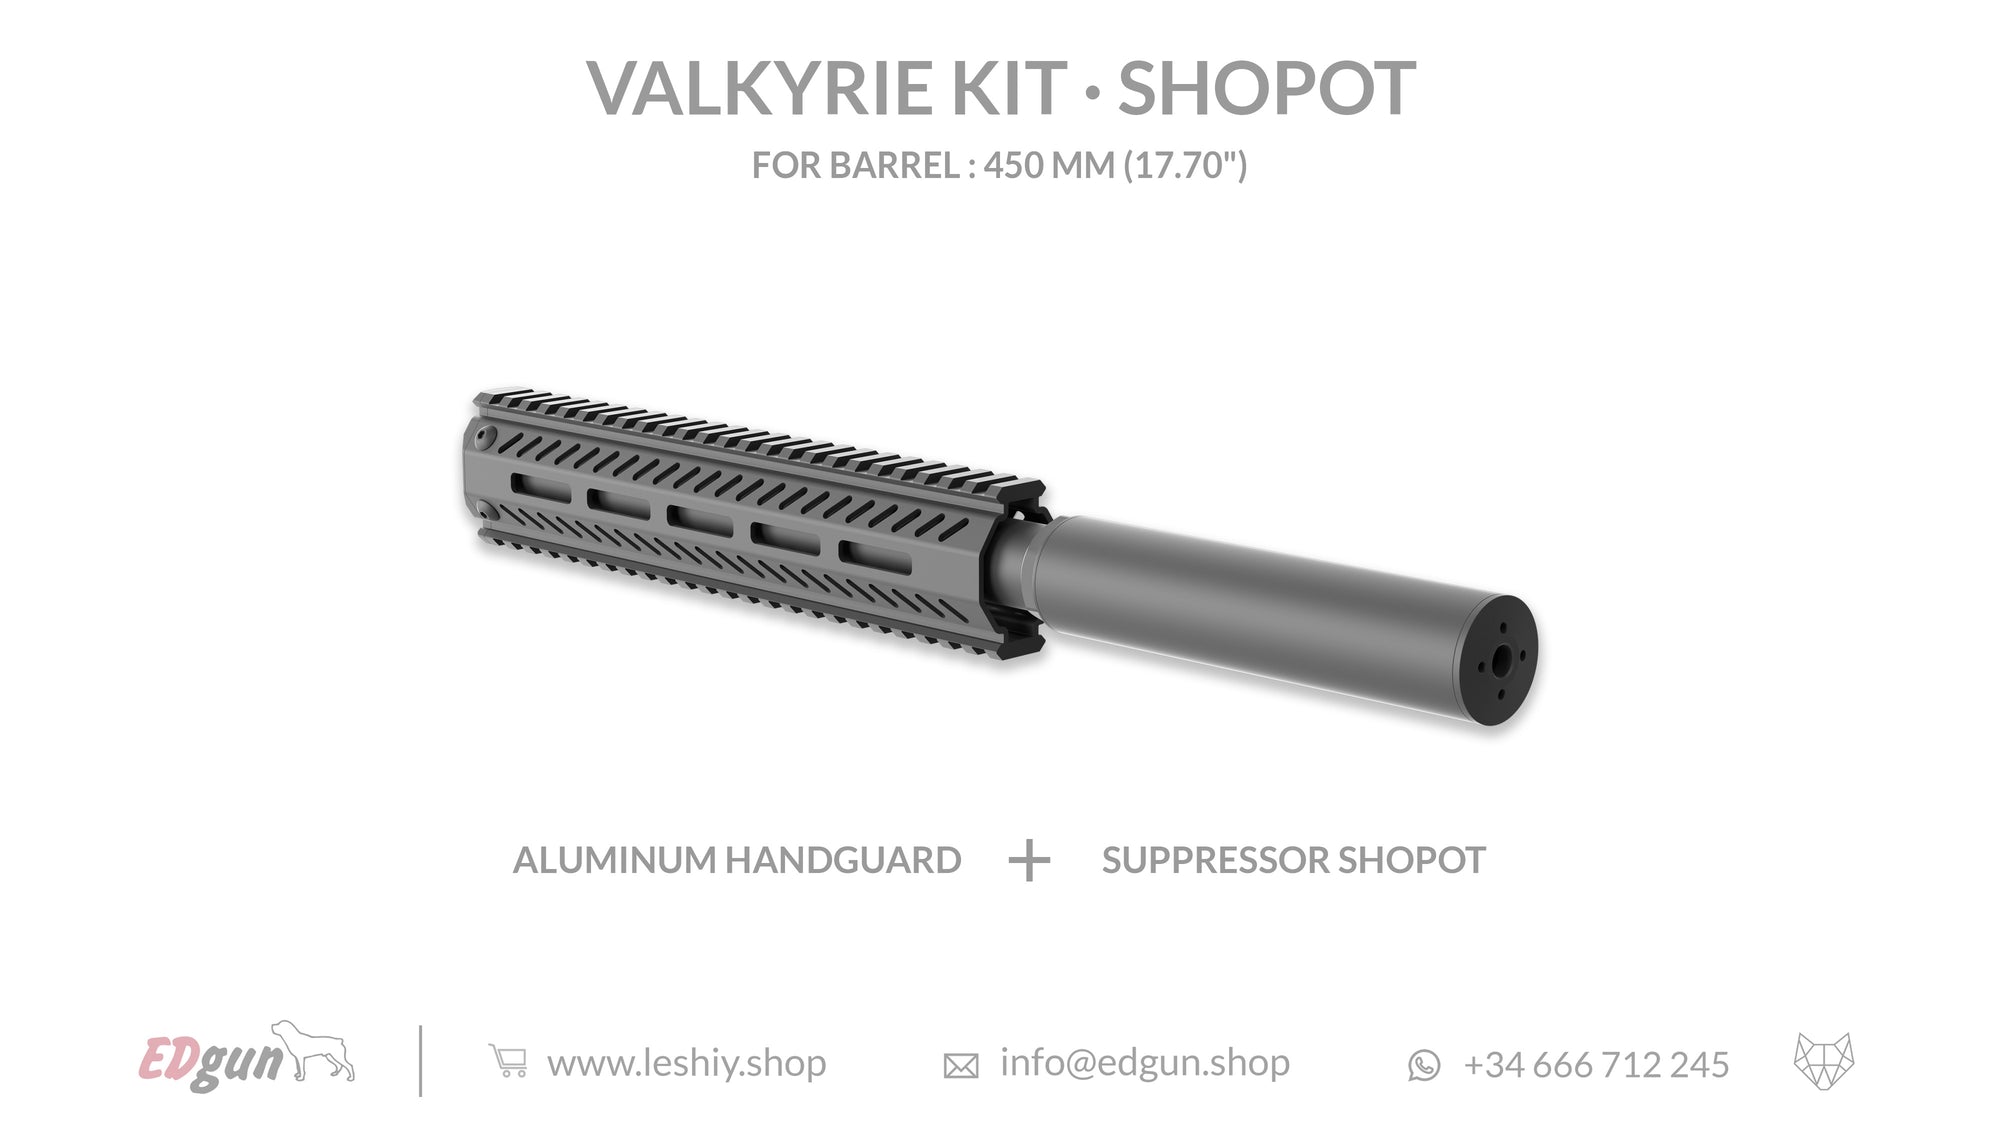 Shopot Valkyrie Kit for barrel 450mm (17.70¨)